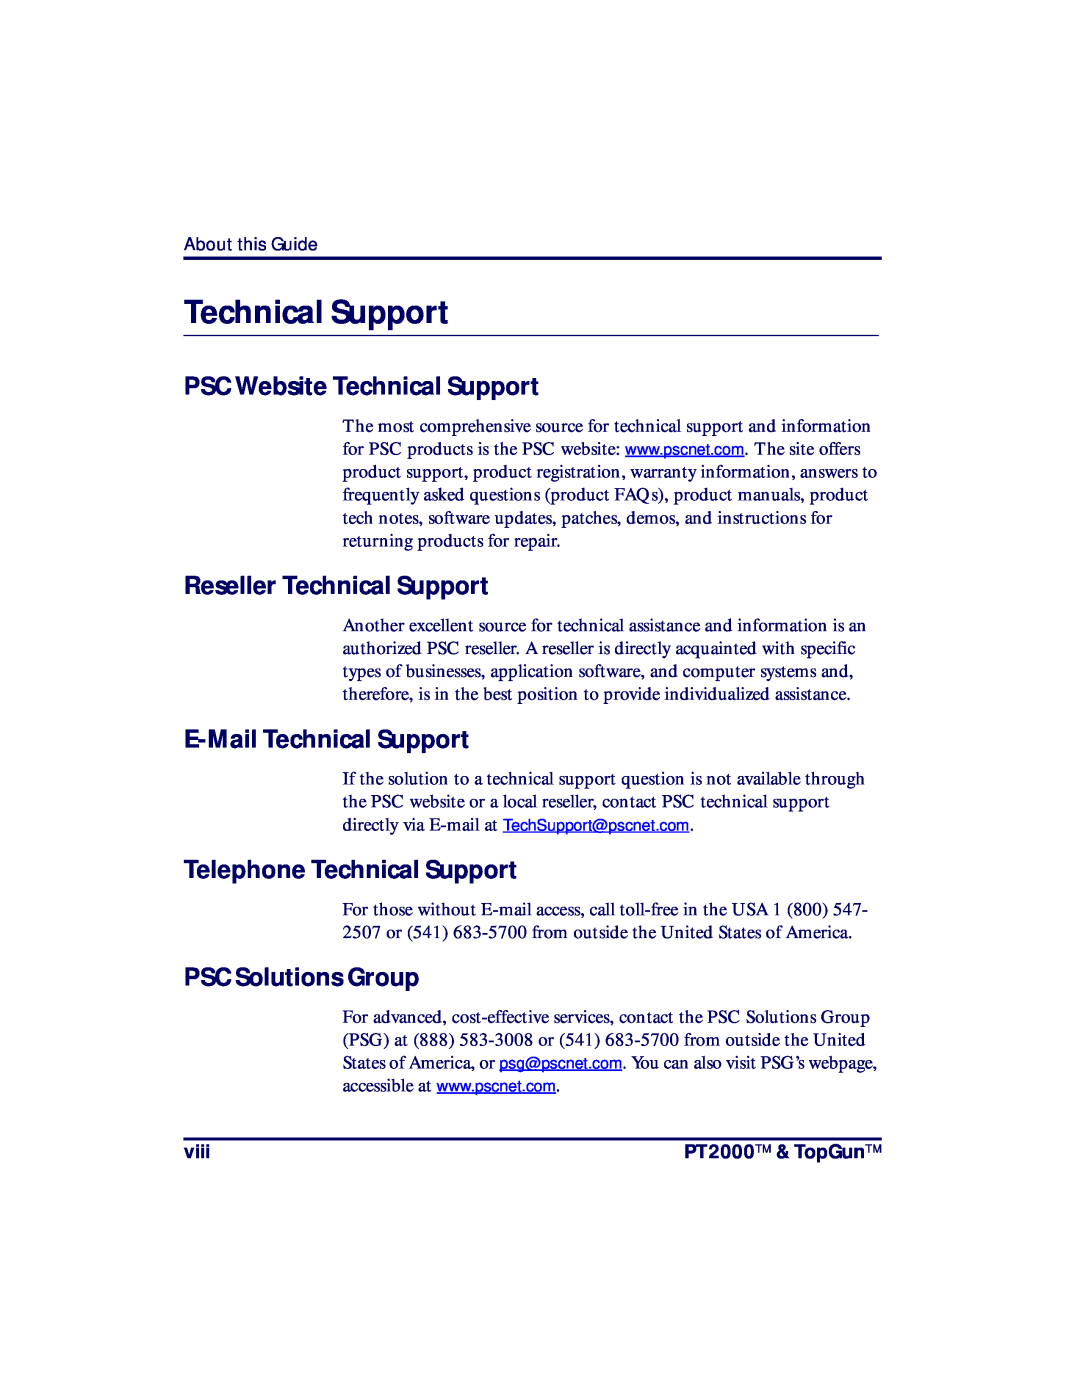 PSC TopGun PSC Website Technical Support, Reseller Technical Support, E-Mail Technical Support, PSC Solutions Group 